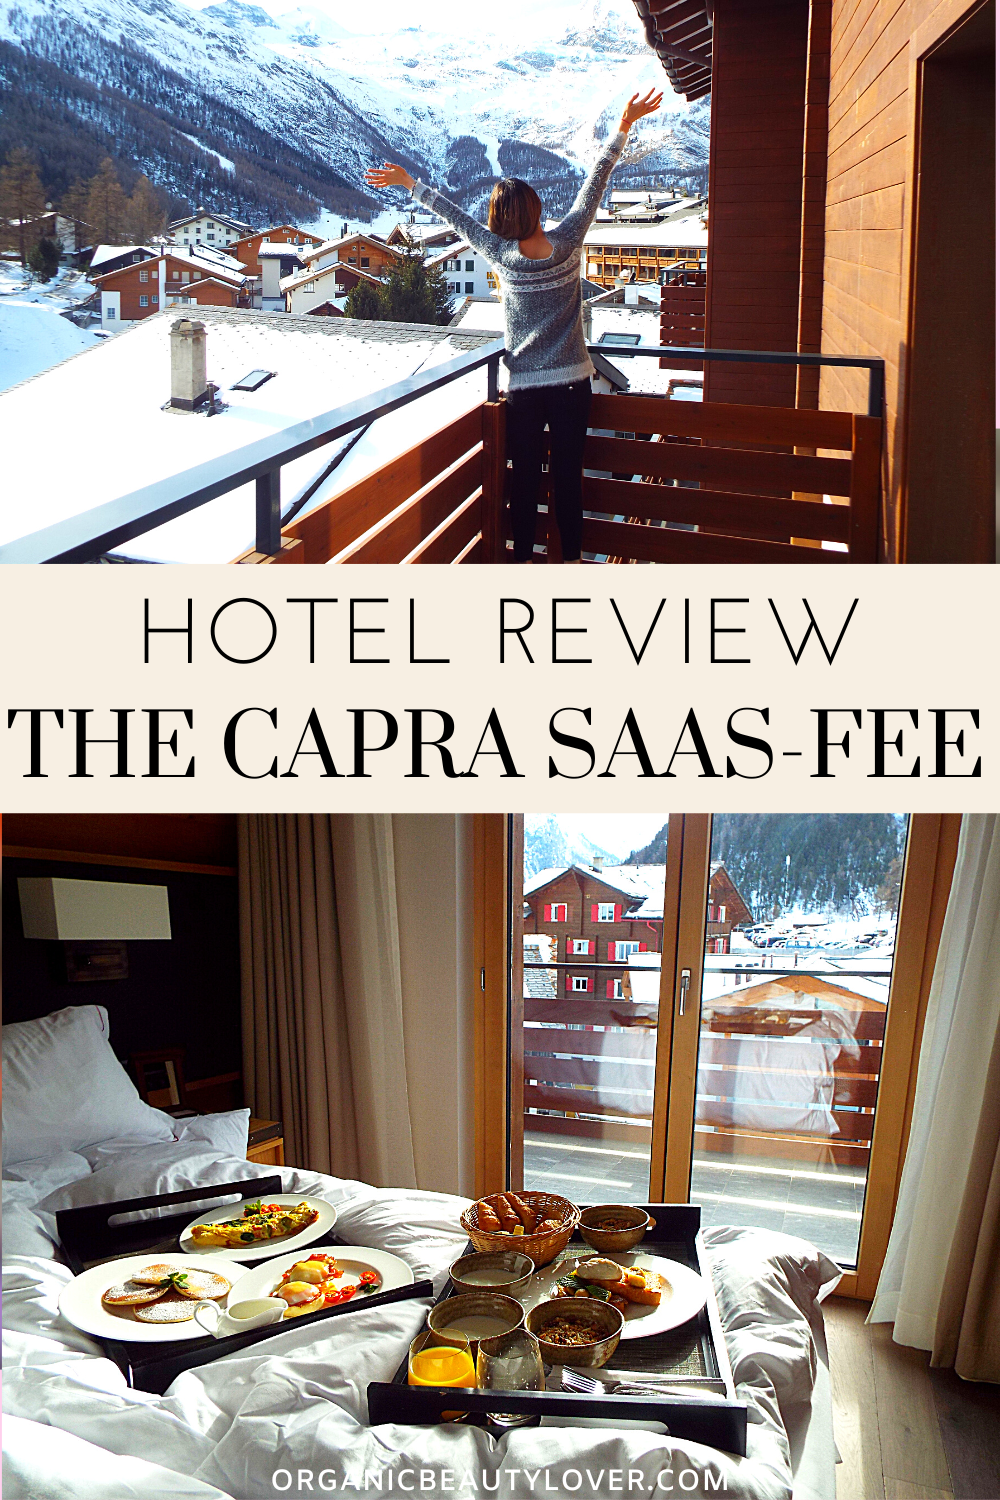 The Capra saas fee hotel